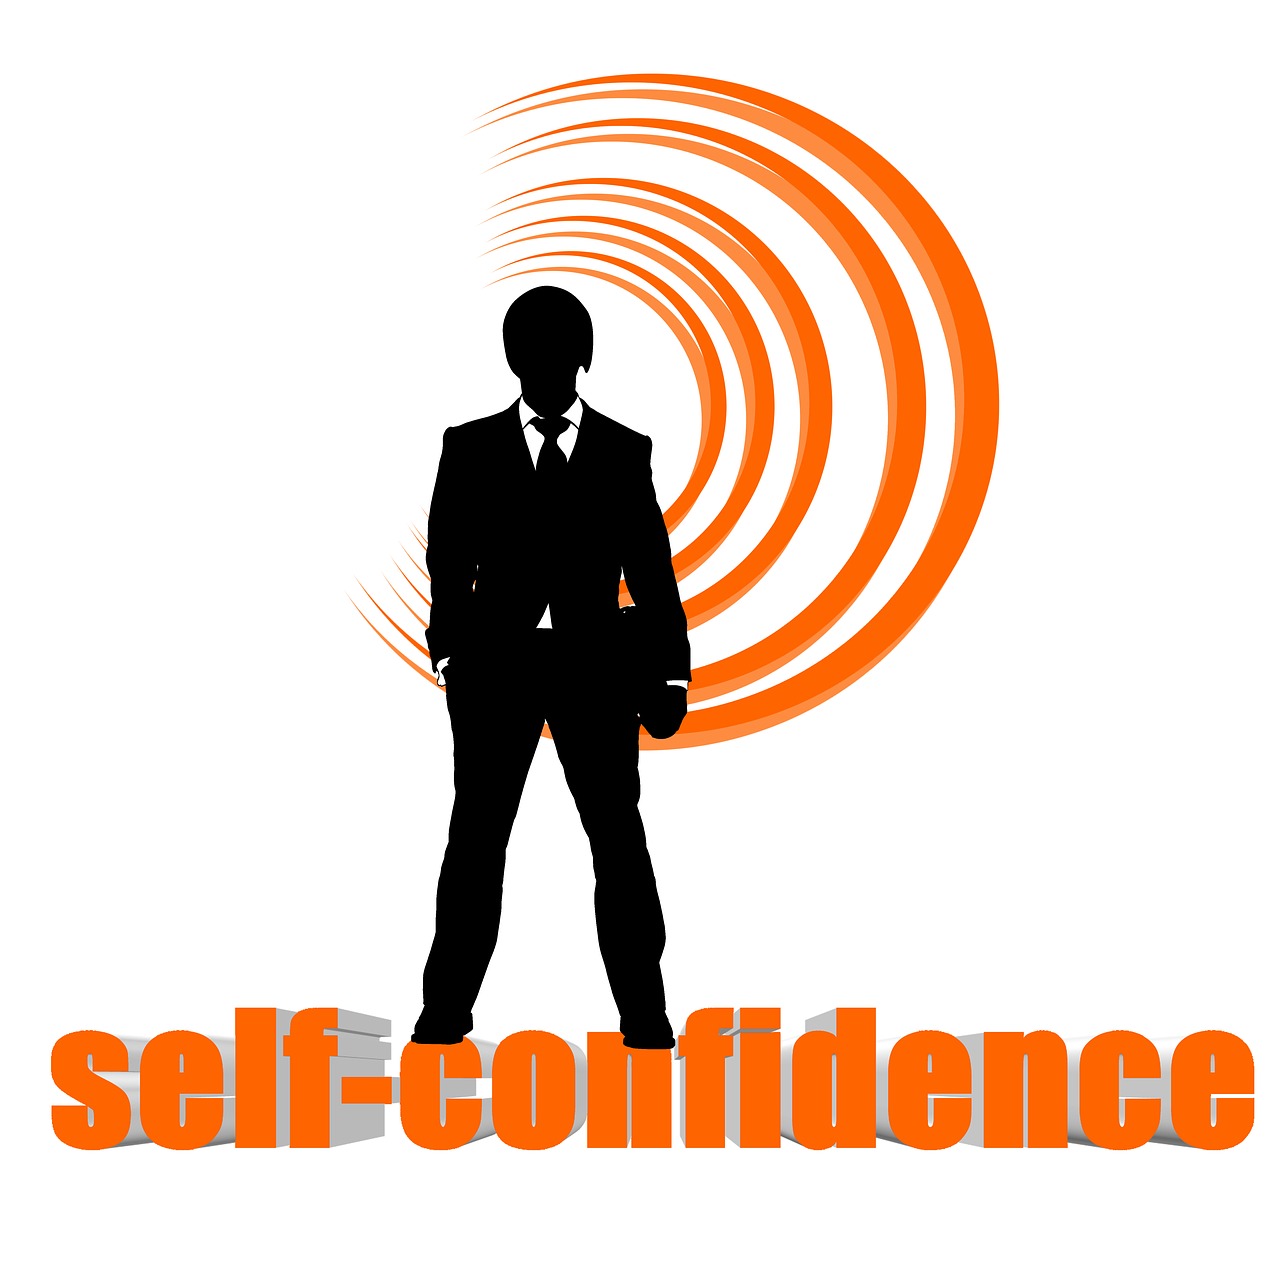 man self-confidence self confidence free photo